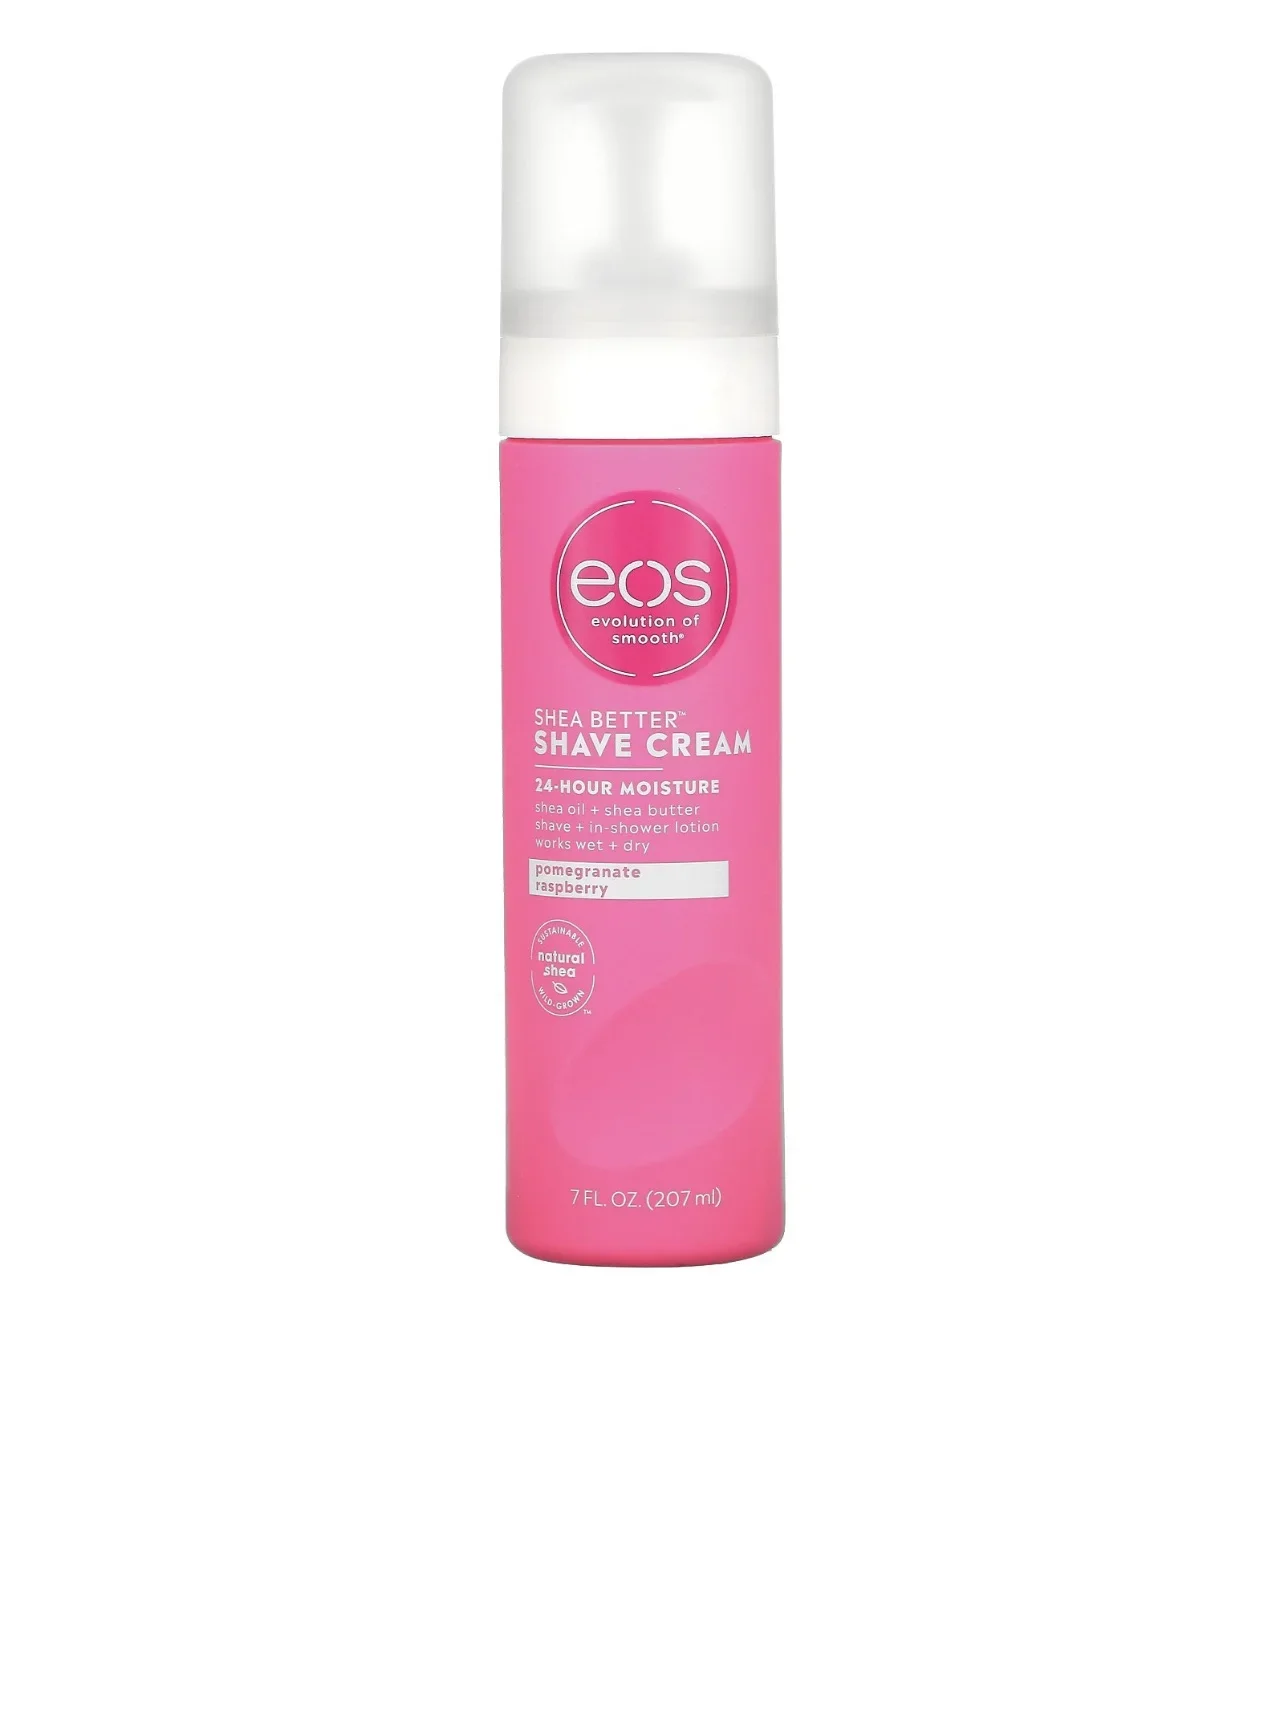 EOS Shave Cream pomegranate raspberry 207ml (Ready Stock)